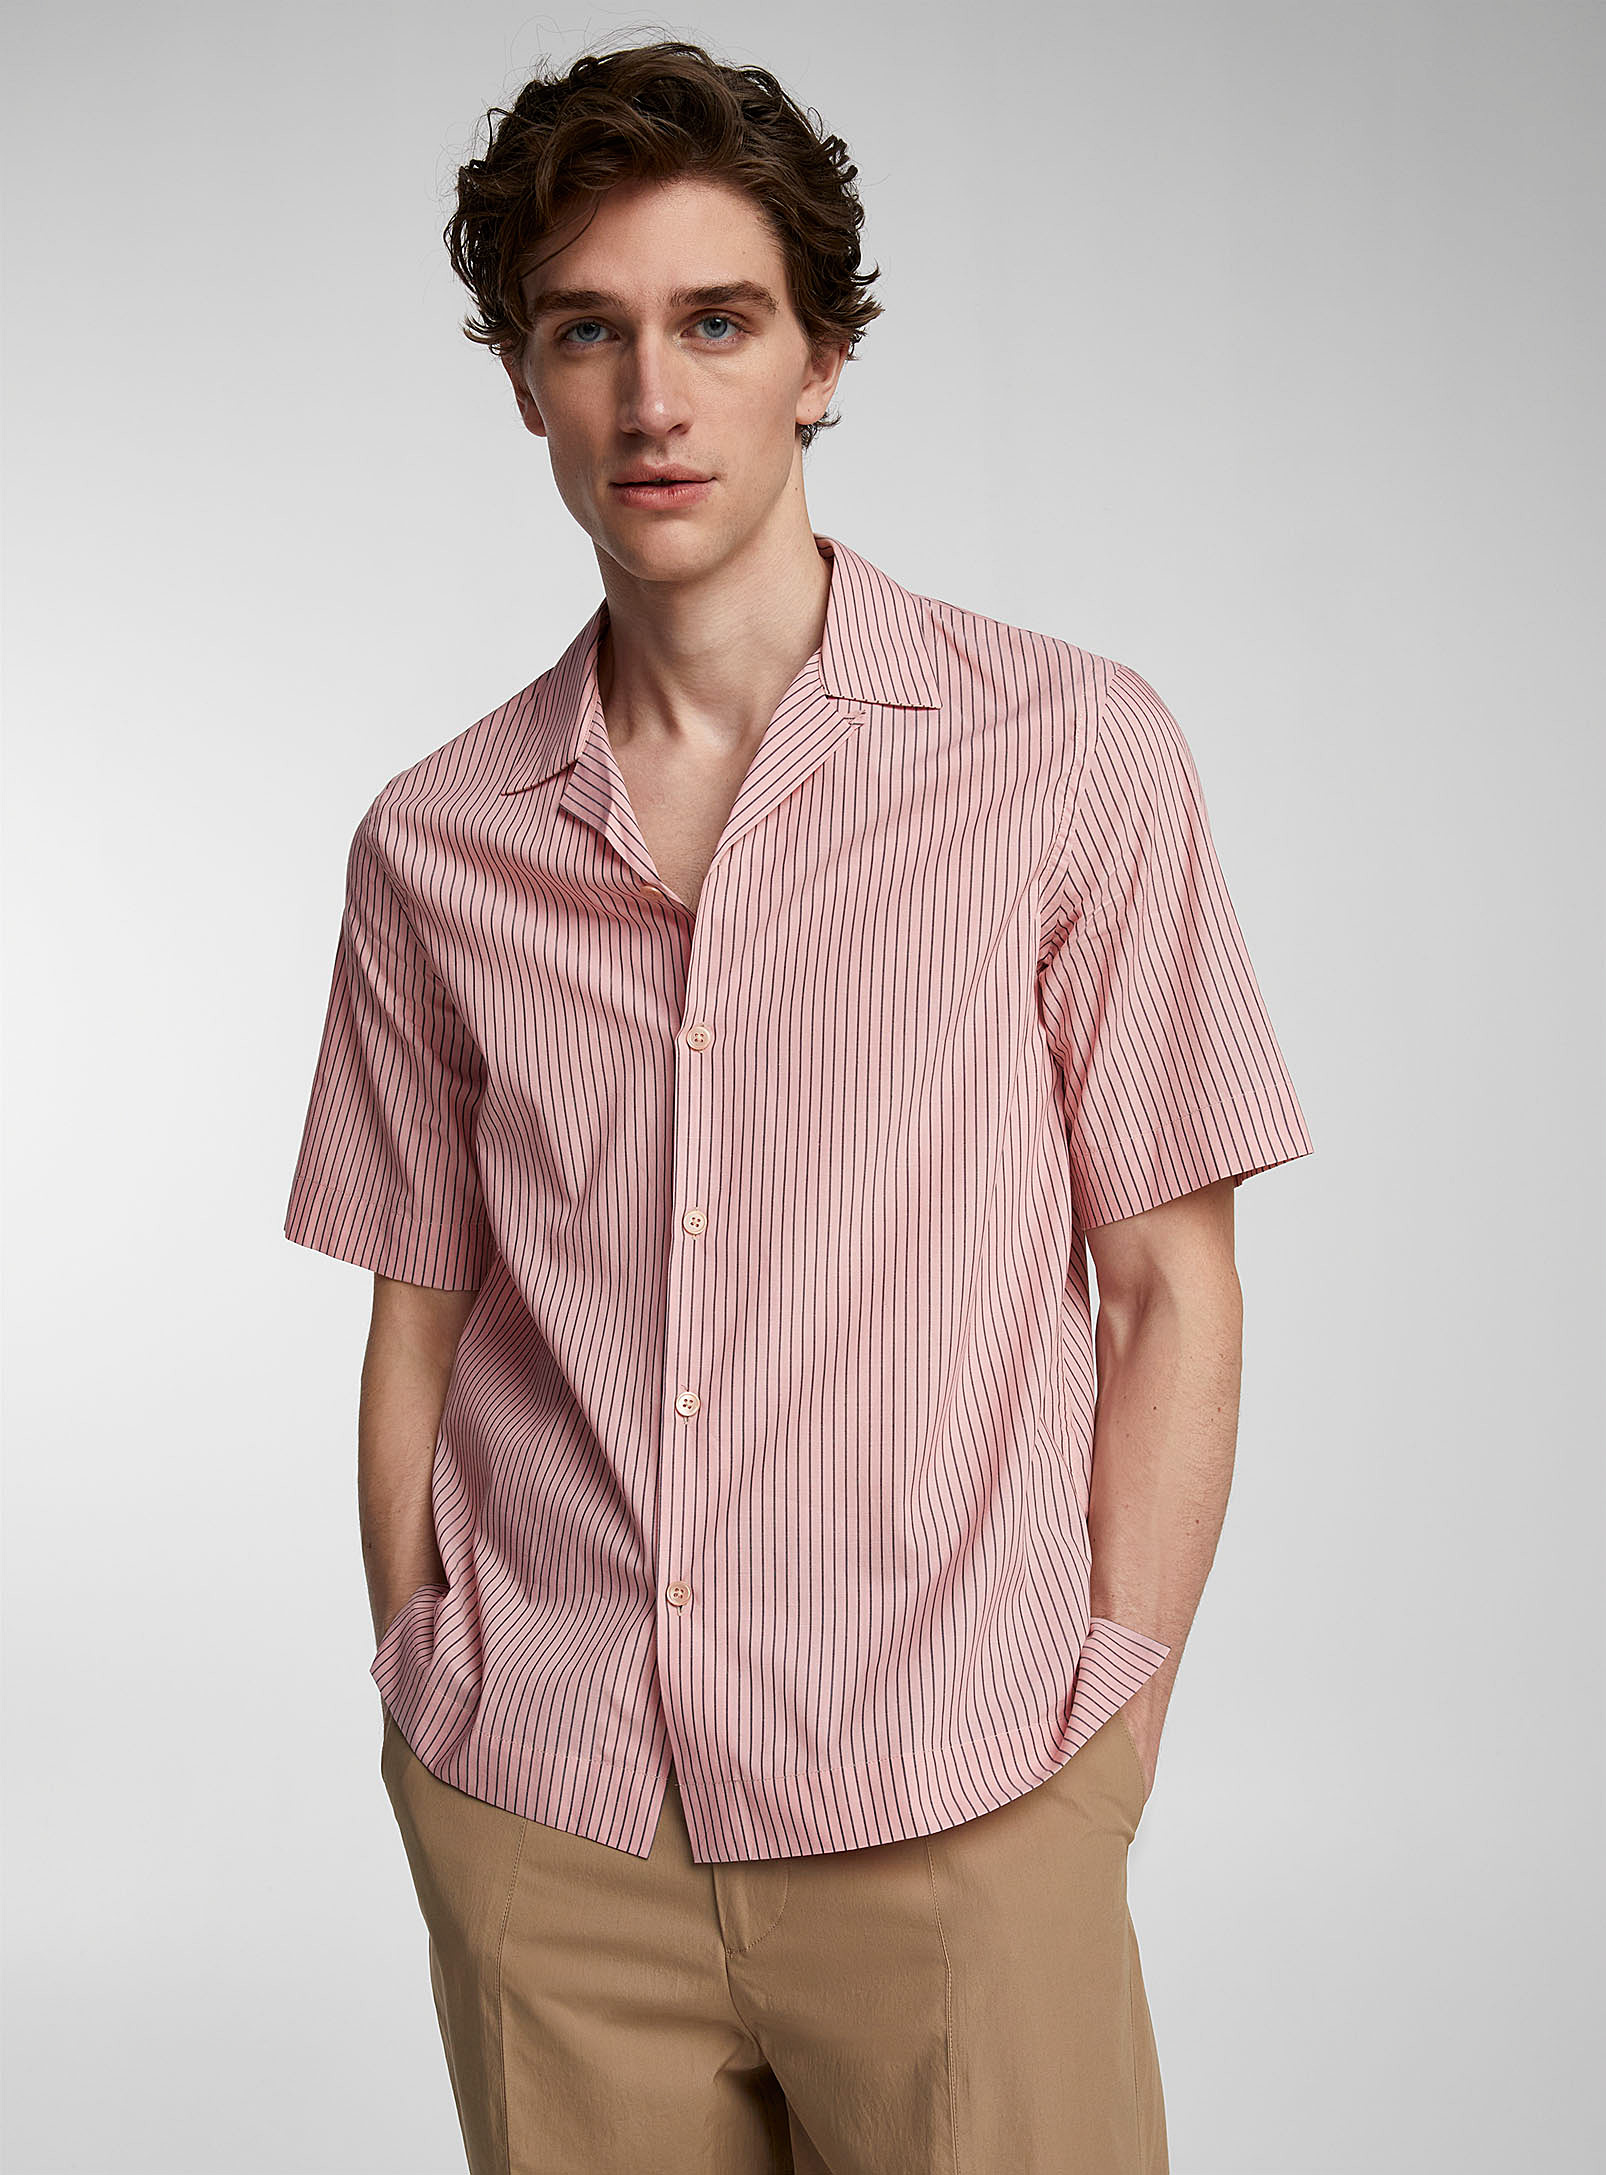 Paul Smith - La chemise coton fines rayures